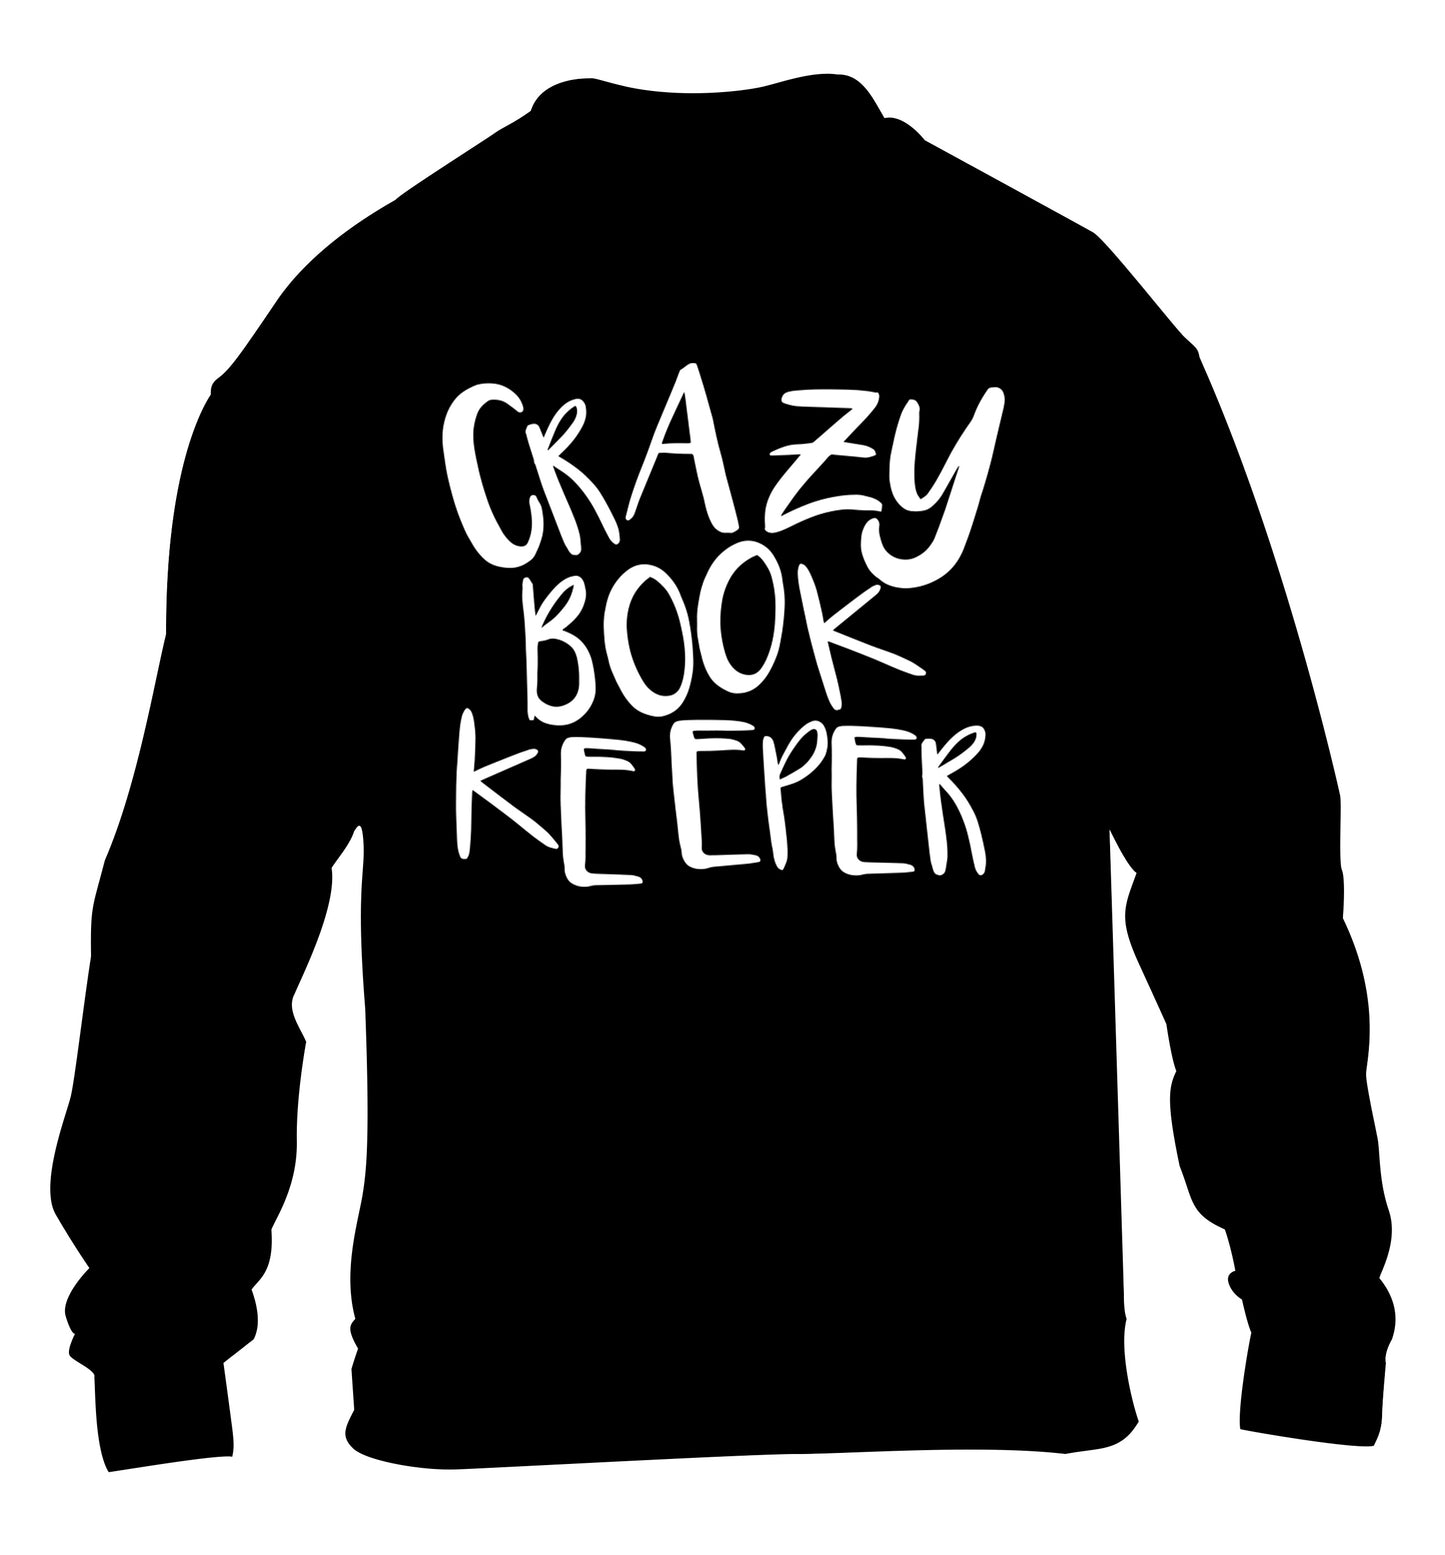 Crazy bookkeeper children's black sweater 12-13 Years